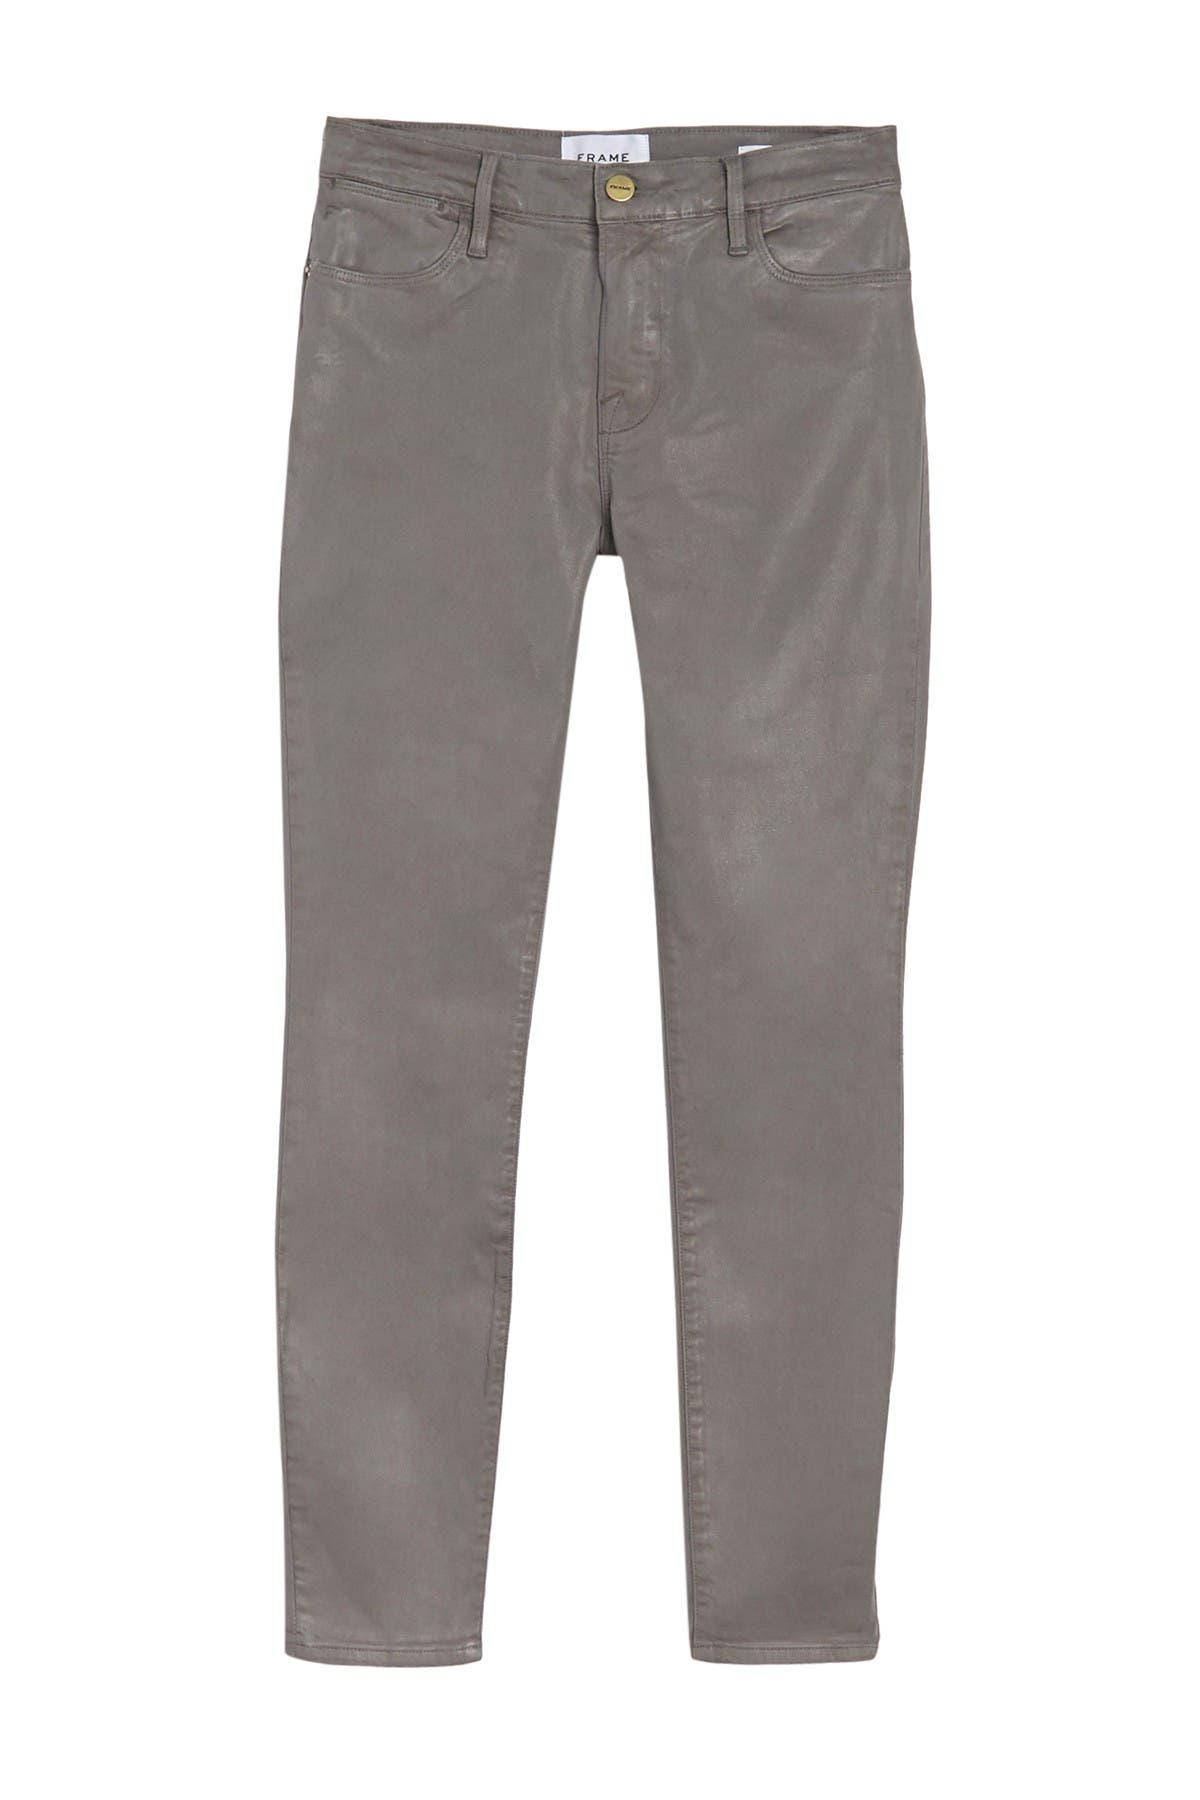 frame grey jeans